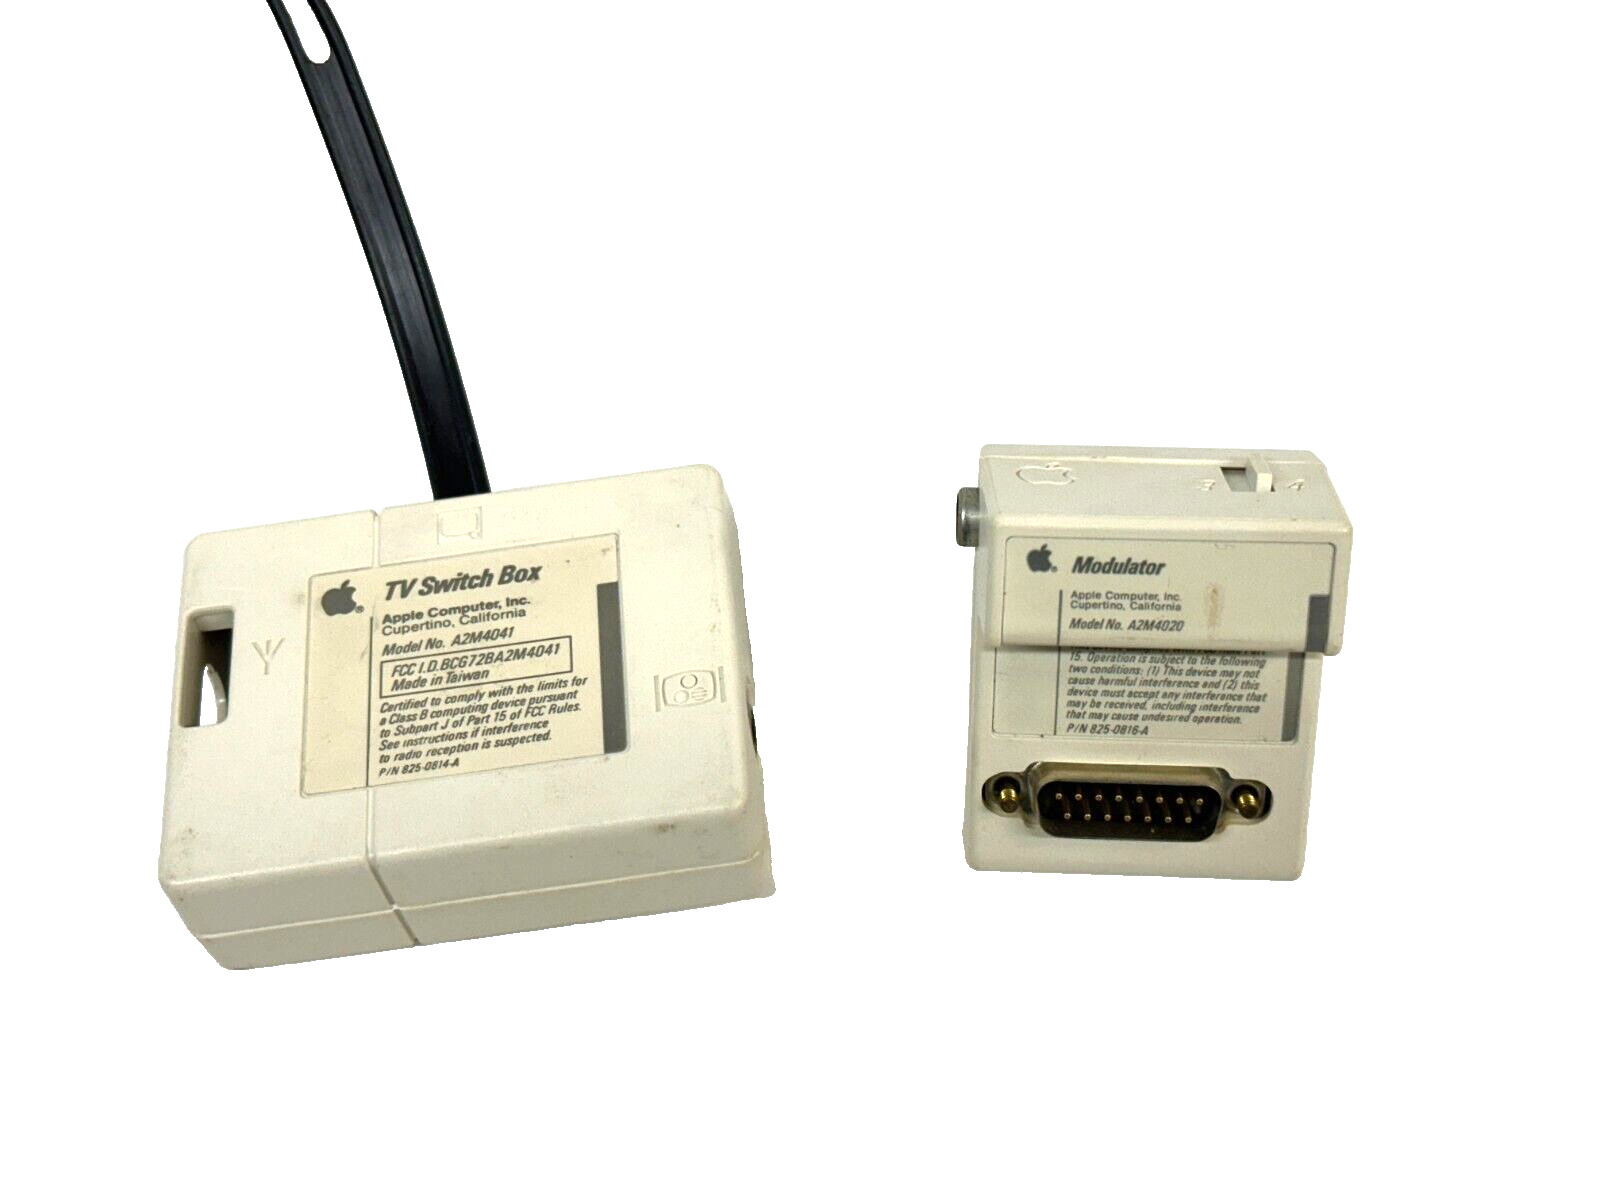 Apple IIc RF Modulator Television Video Adapter A2M4020 w/ TV Switch Box A2M4041